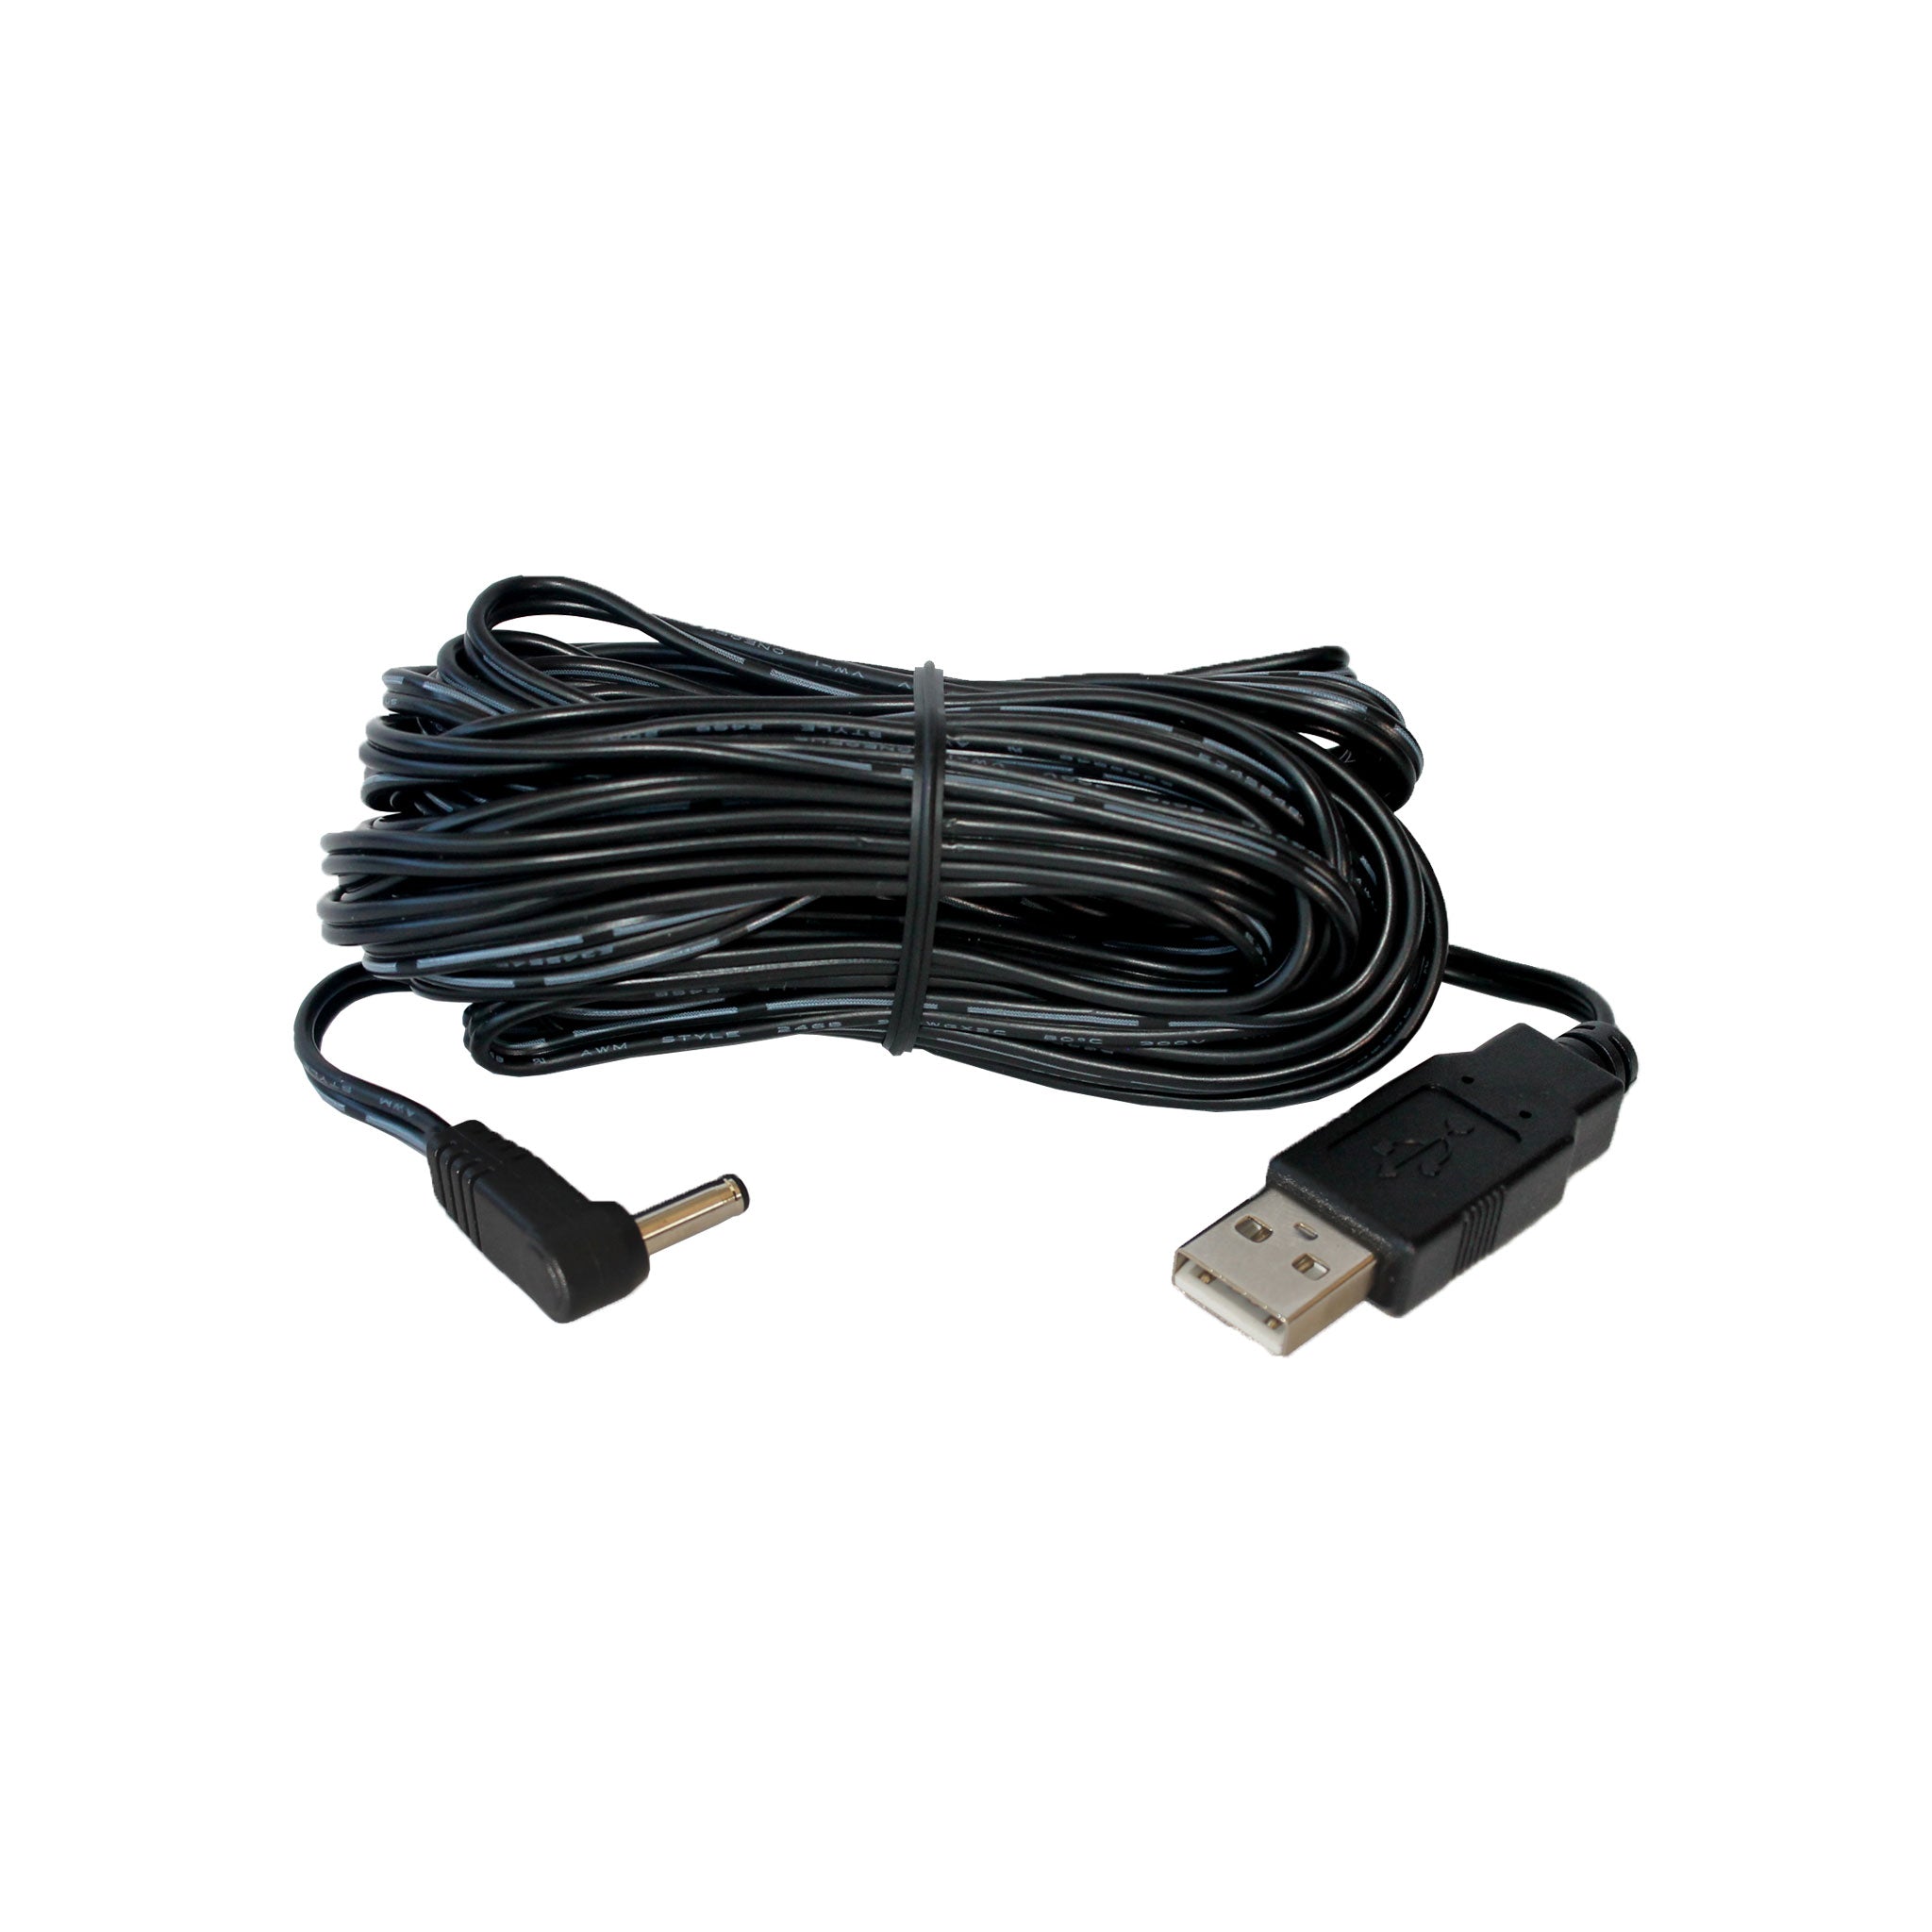 USB Power Cord - 25' (7.5 or 6.5' (2 m) - SKU 6628, — Davis